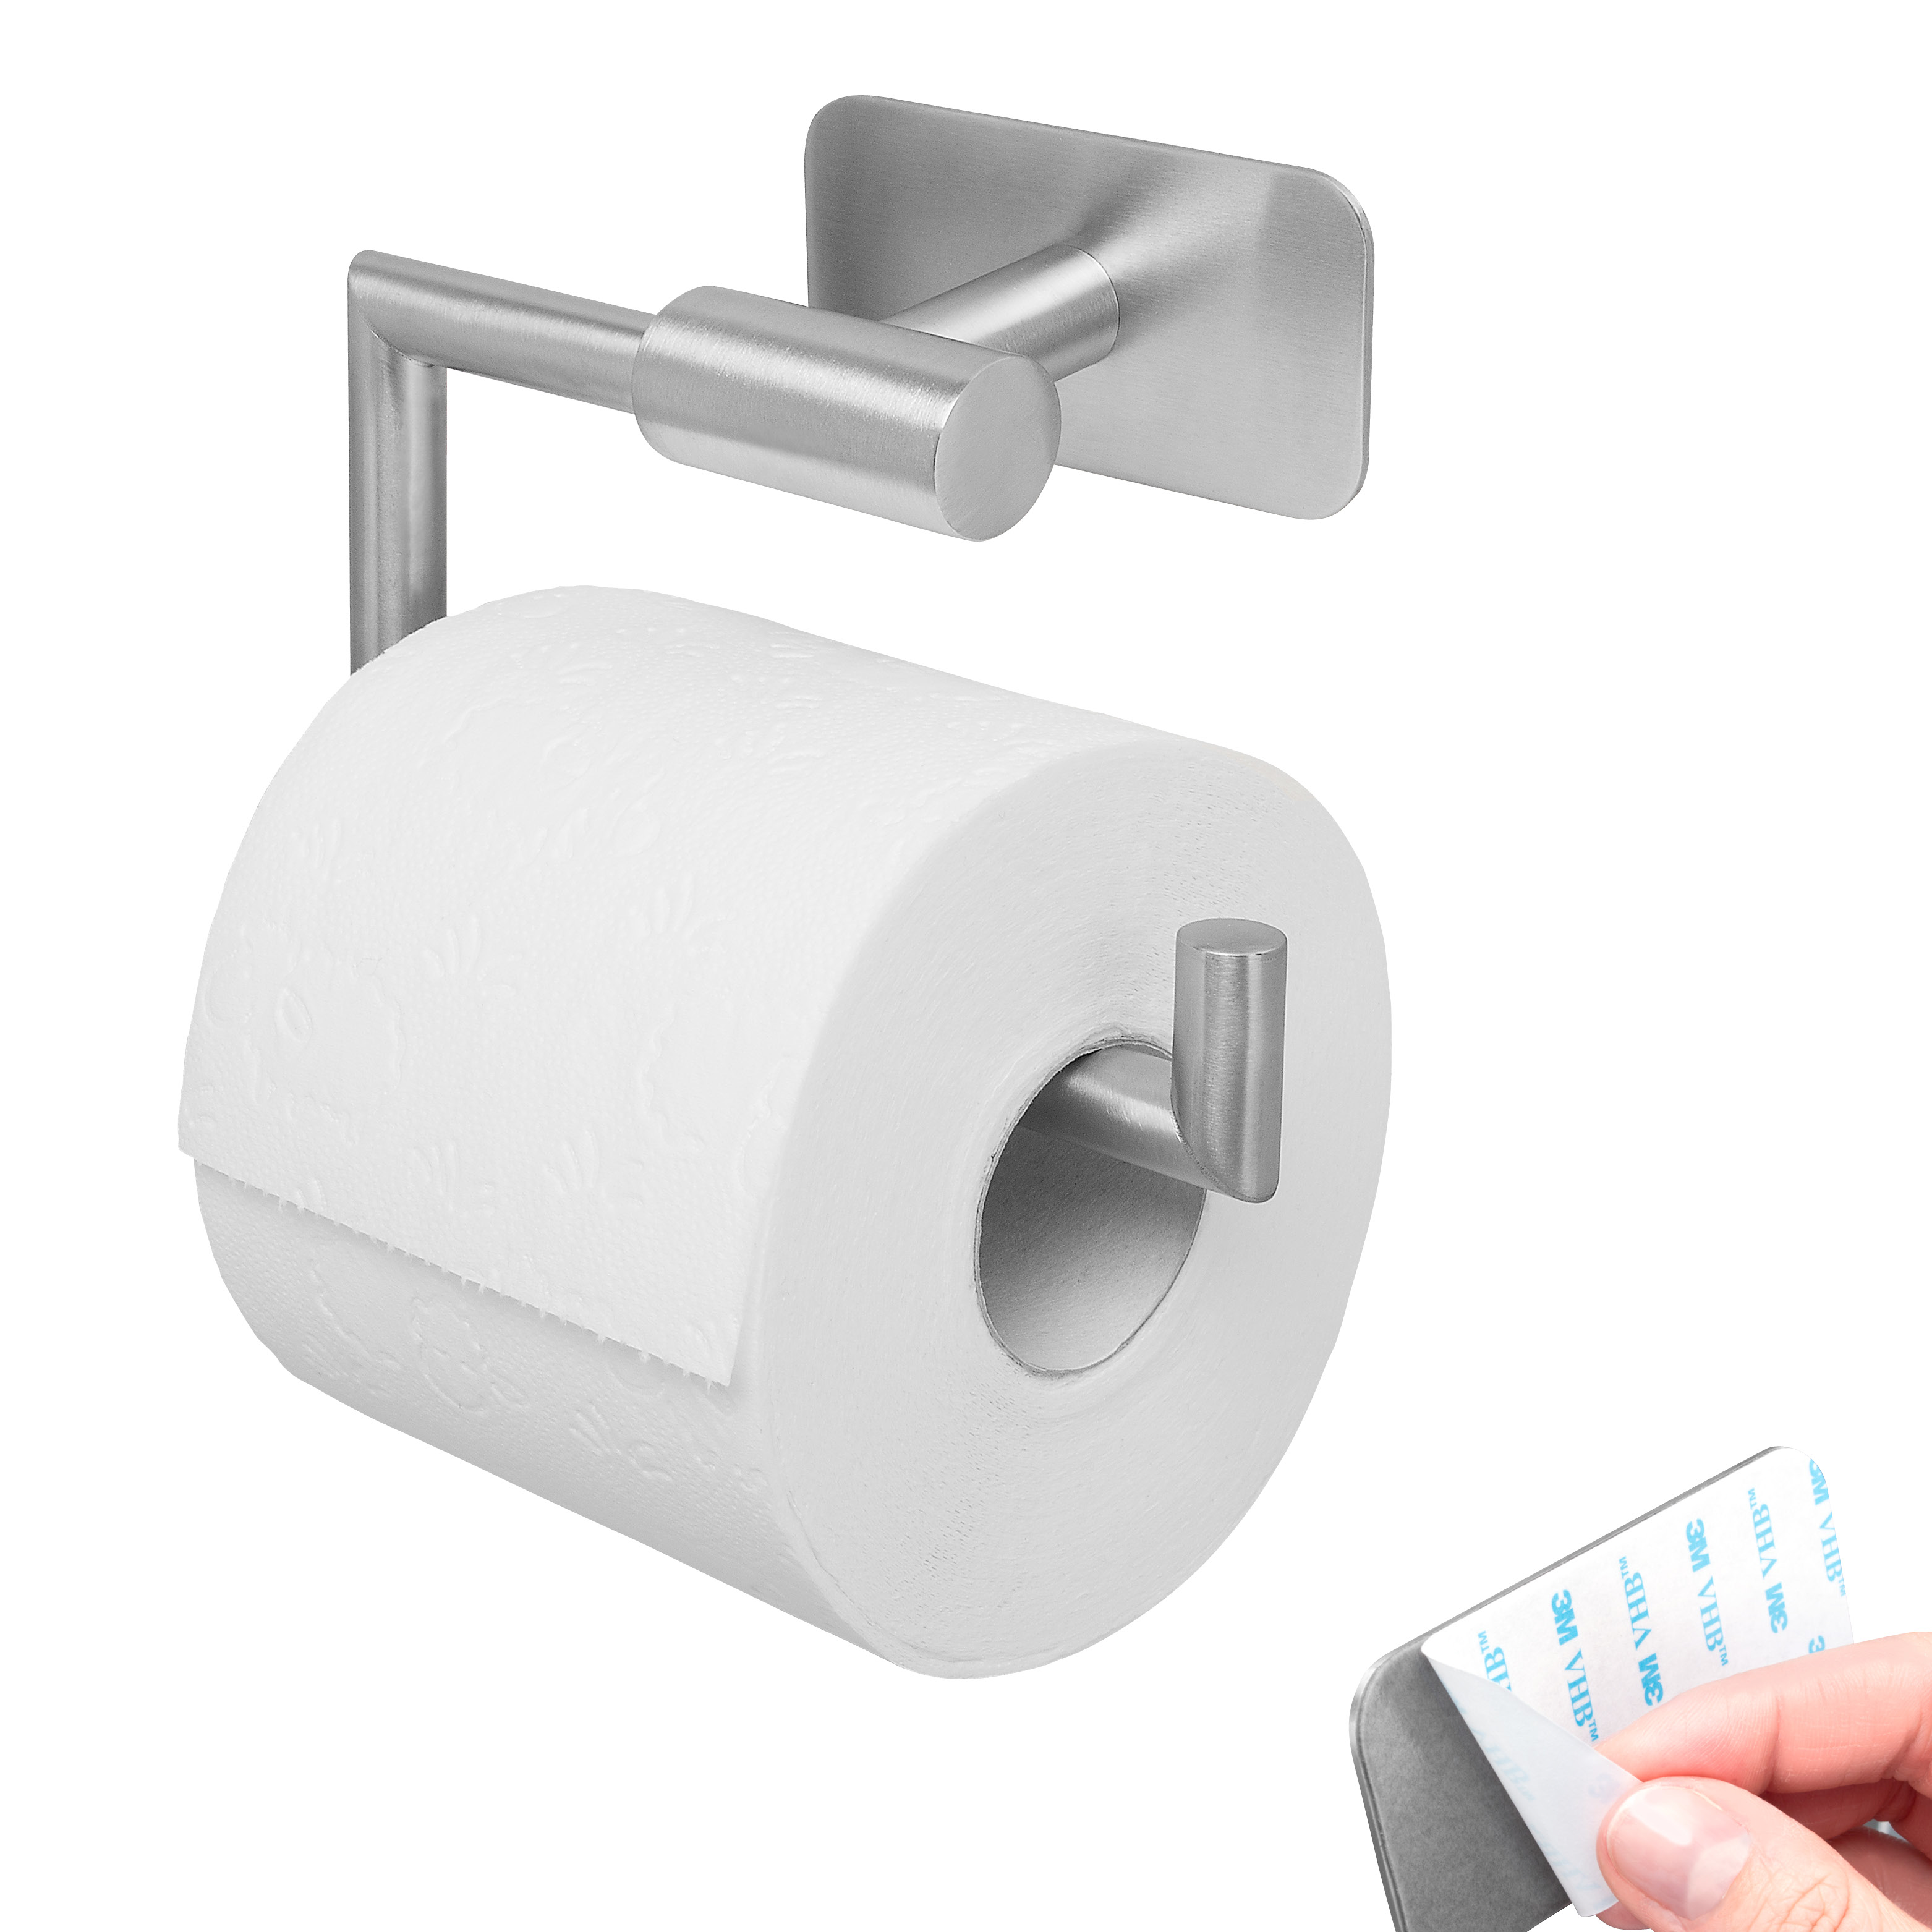 Bad-Serie PIAZZA TAPE Toilettenpapierhalter selbstklebend Edelstahl, matt